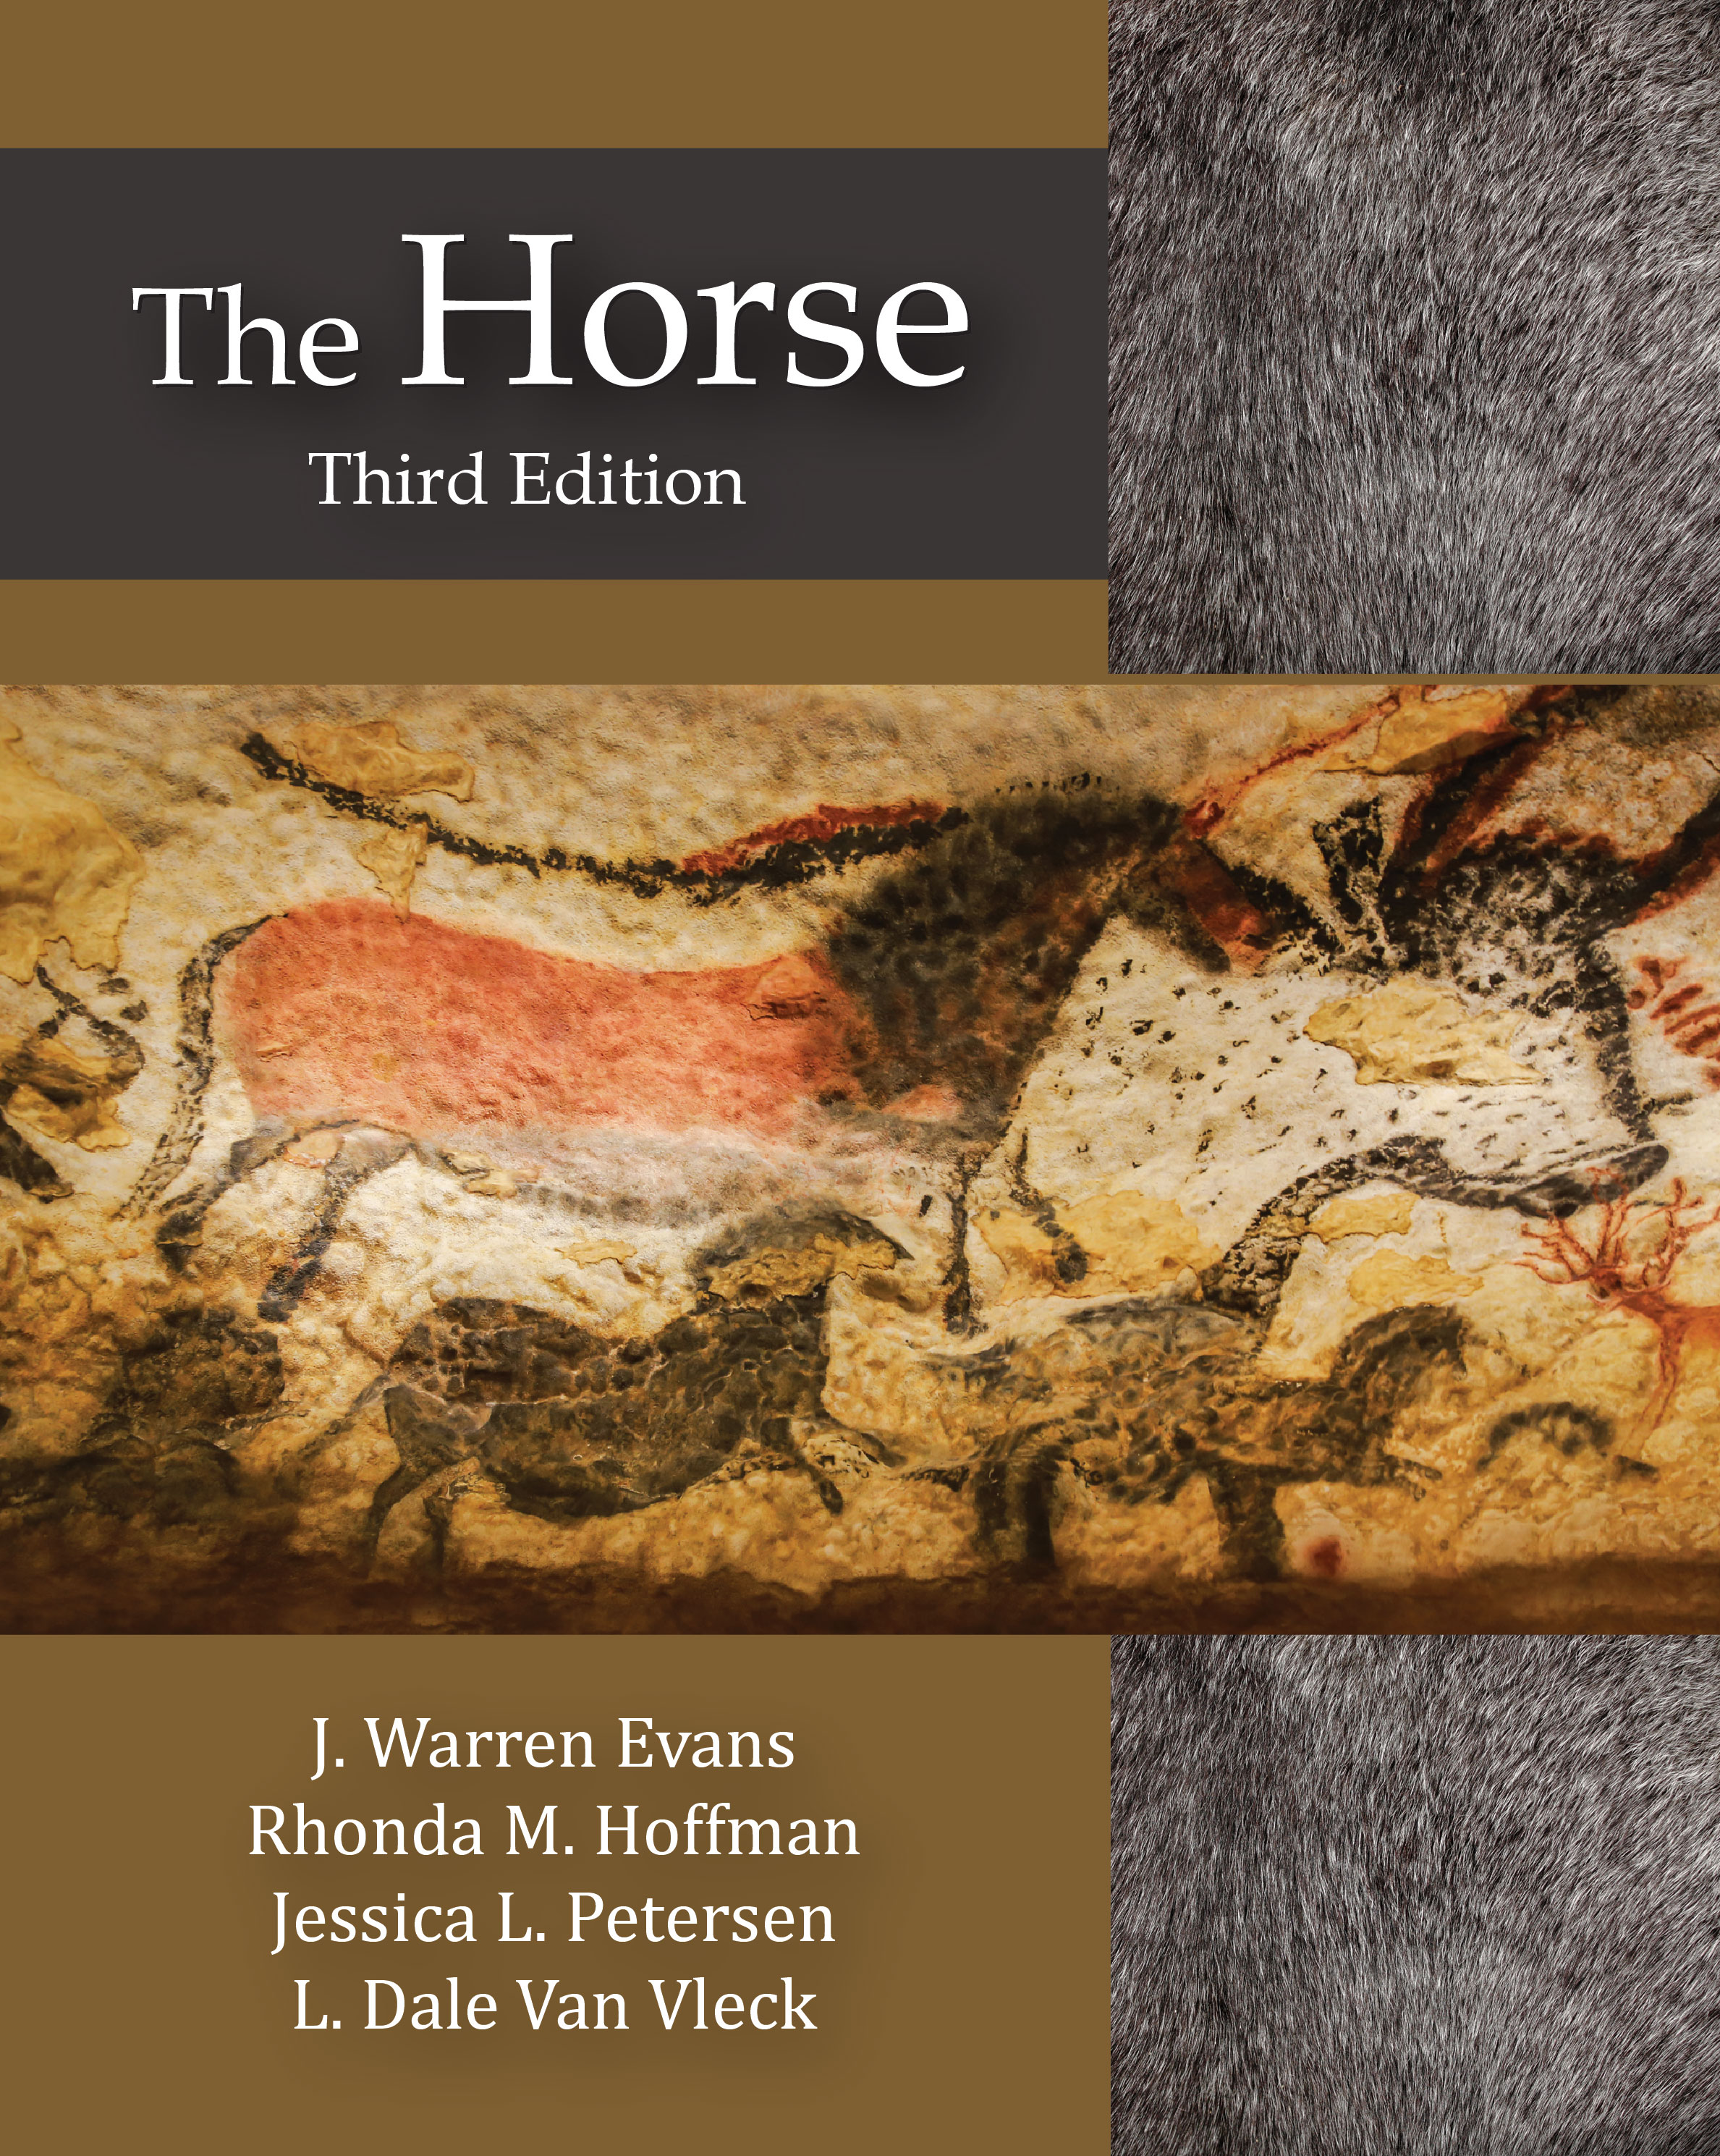 The Horse: Third Edition by J. Warren Evans, Rhonda M. Hoffman, Jessica L. Petersen, L. Dale Van Vleck